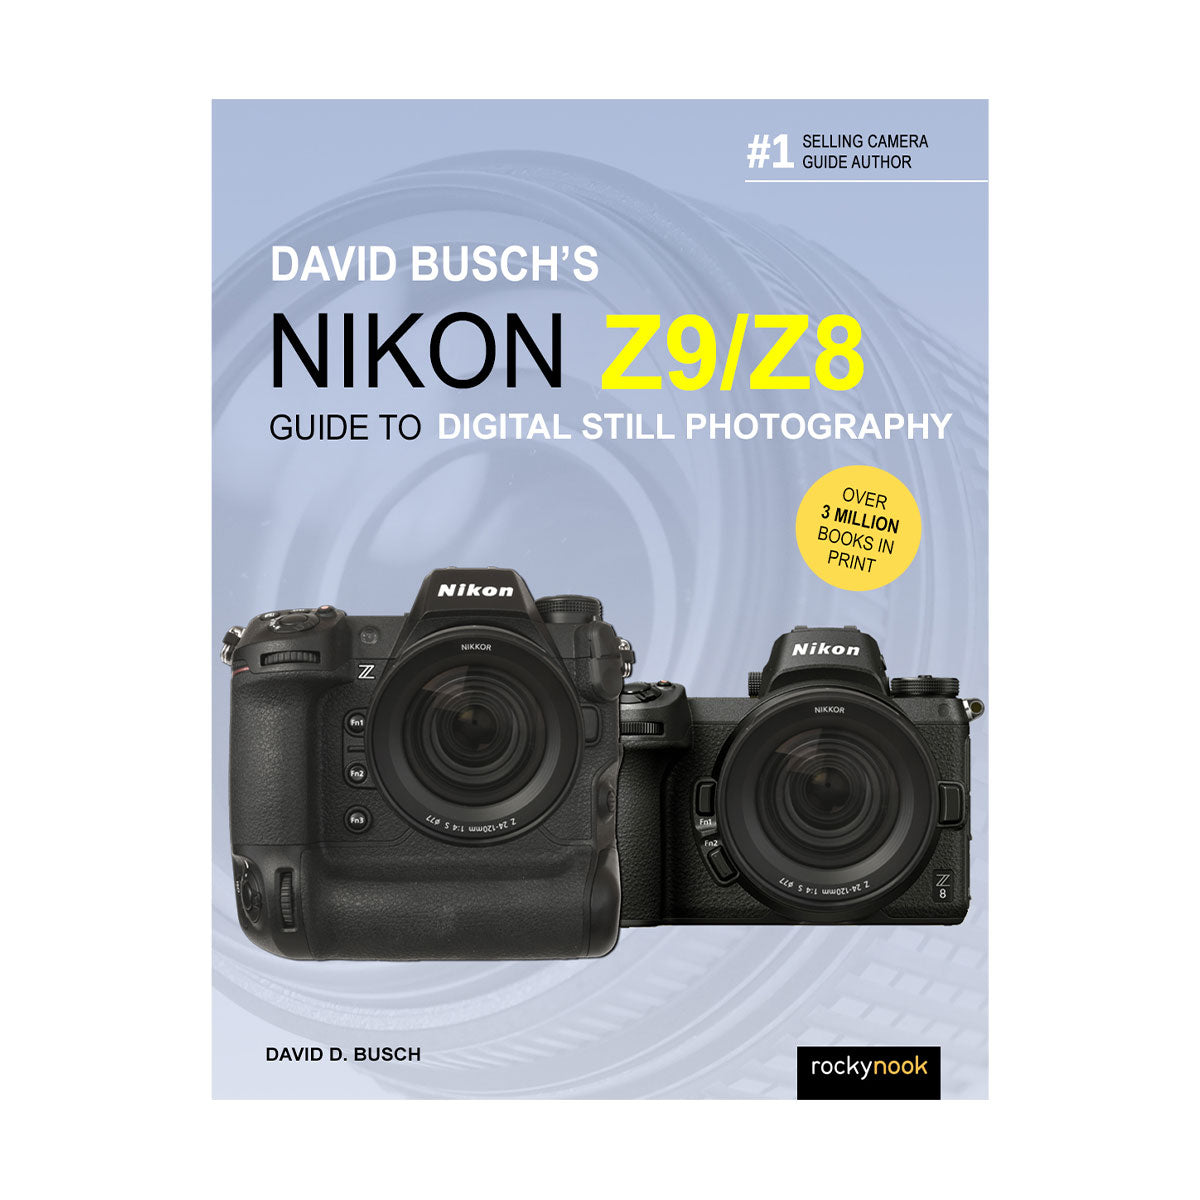 Mastering the Nikon D850 (The Mastering Camera Guide Series)